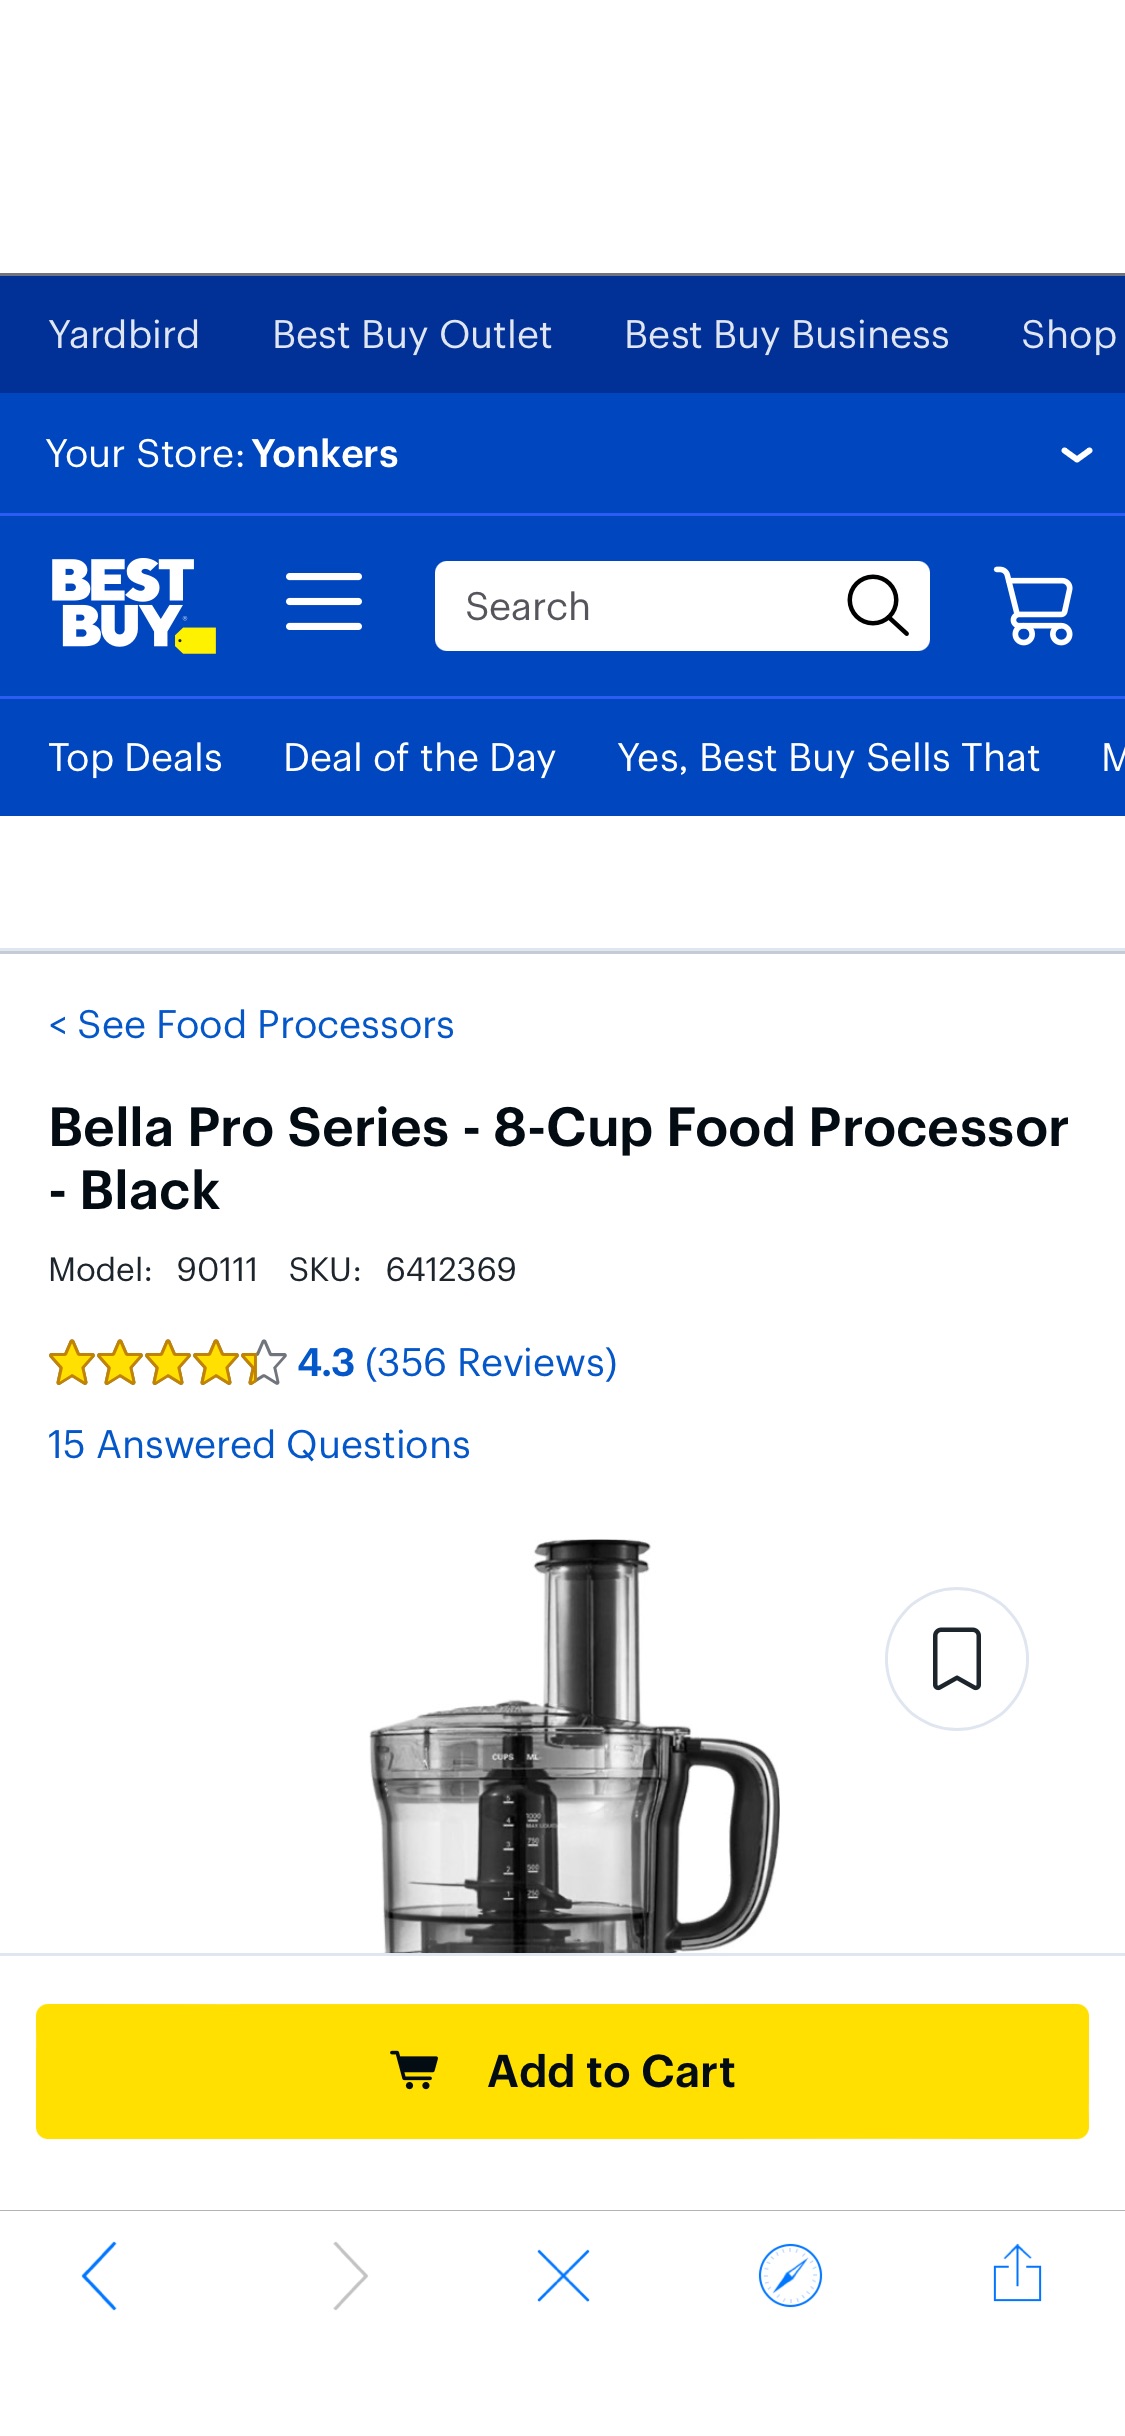 Bella Pro Series 8-Cup Food Processor Black 90111 - Best Buy厨具